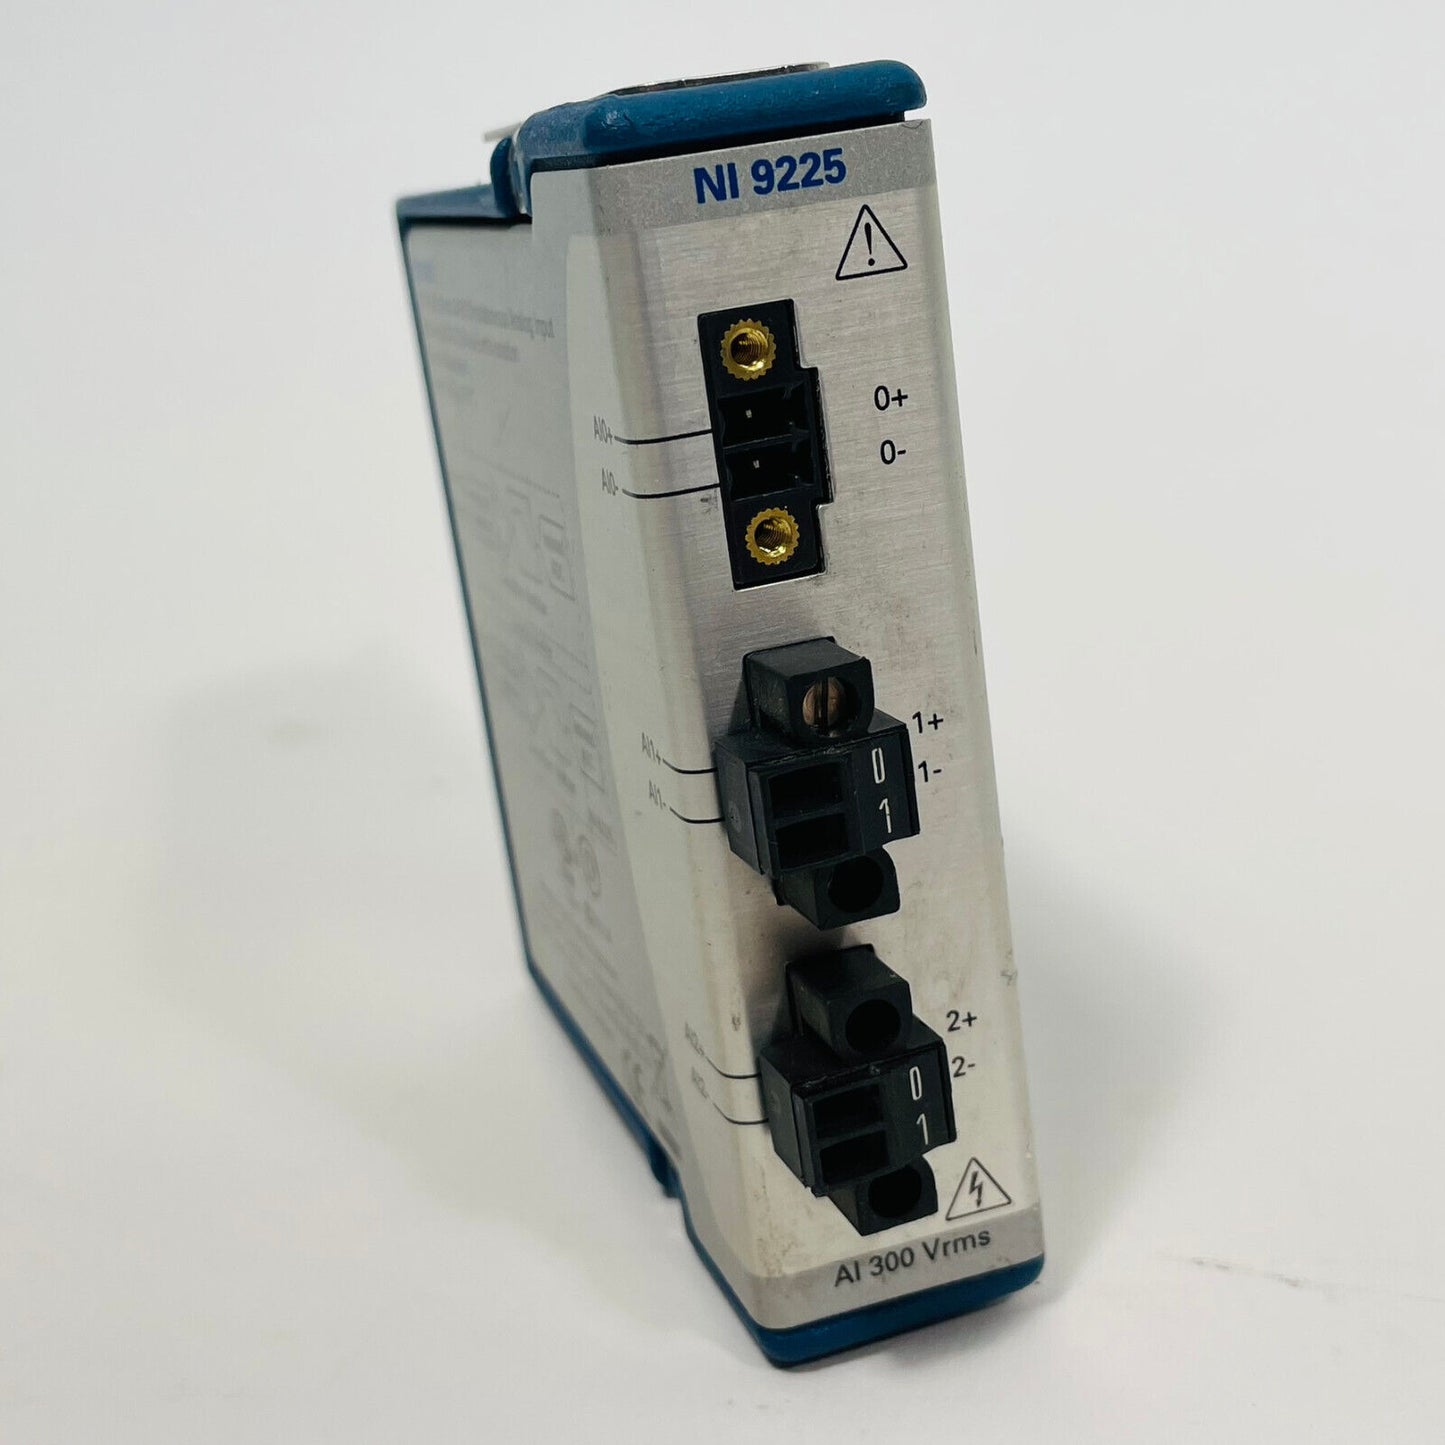 National Instruments NI-9225 cDAQ High Voltage Analog Input Module